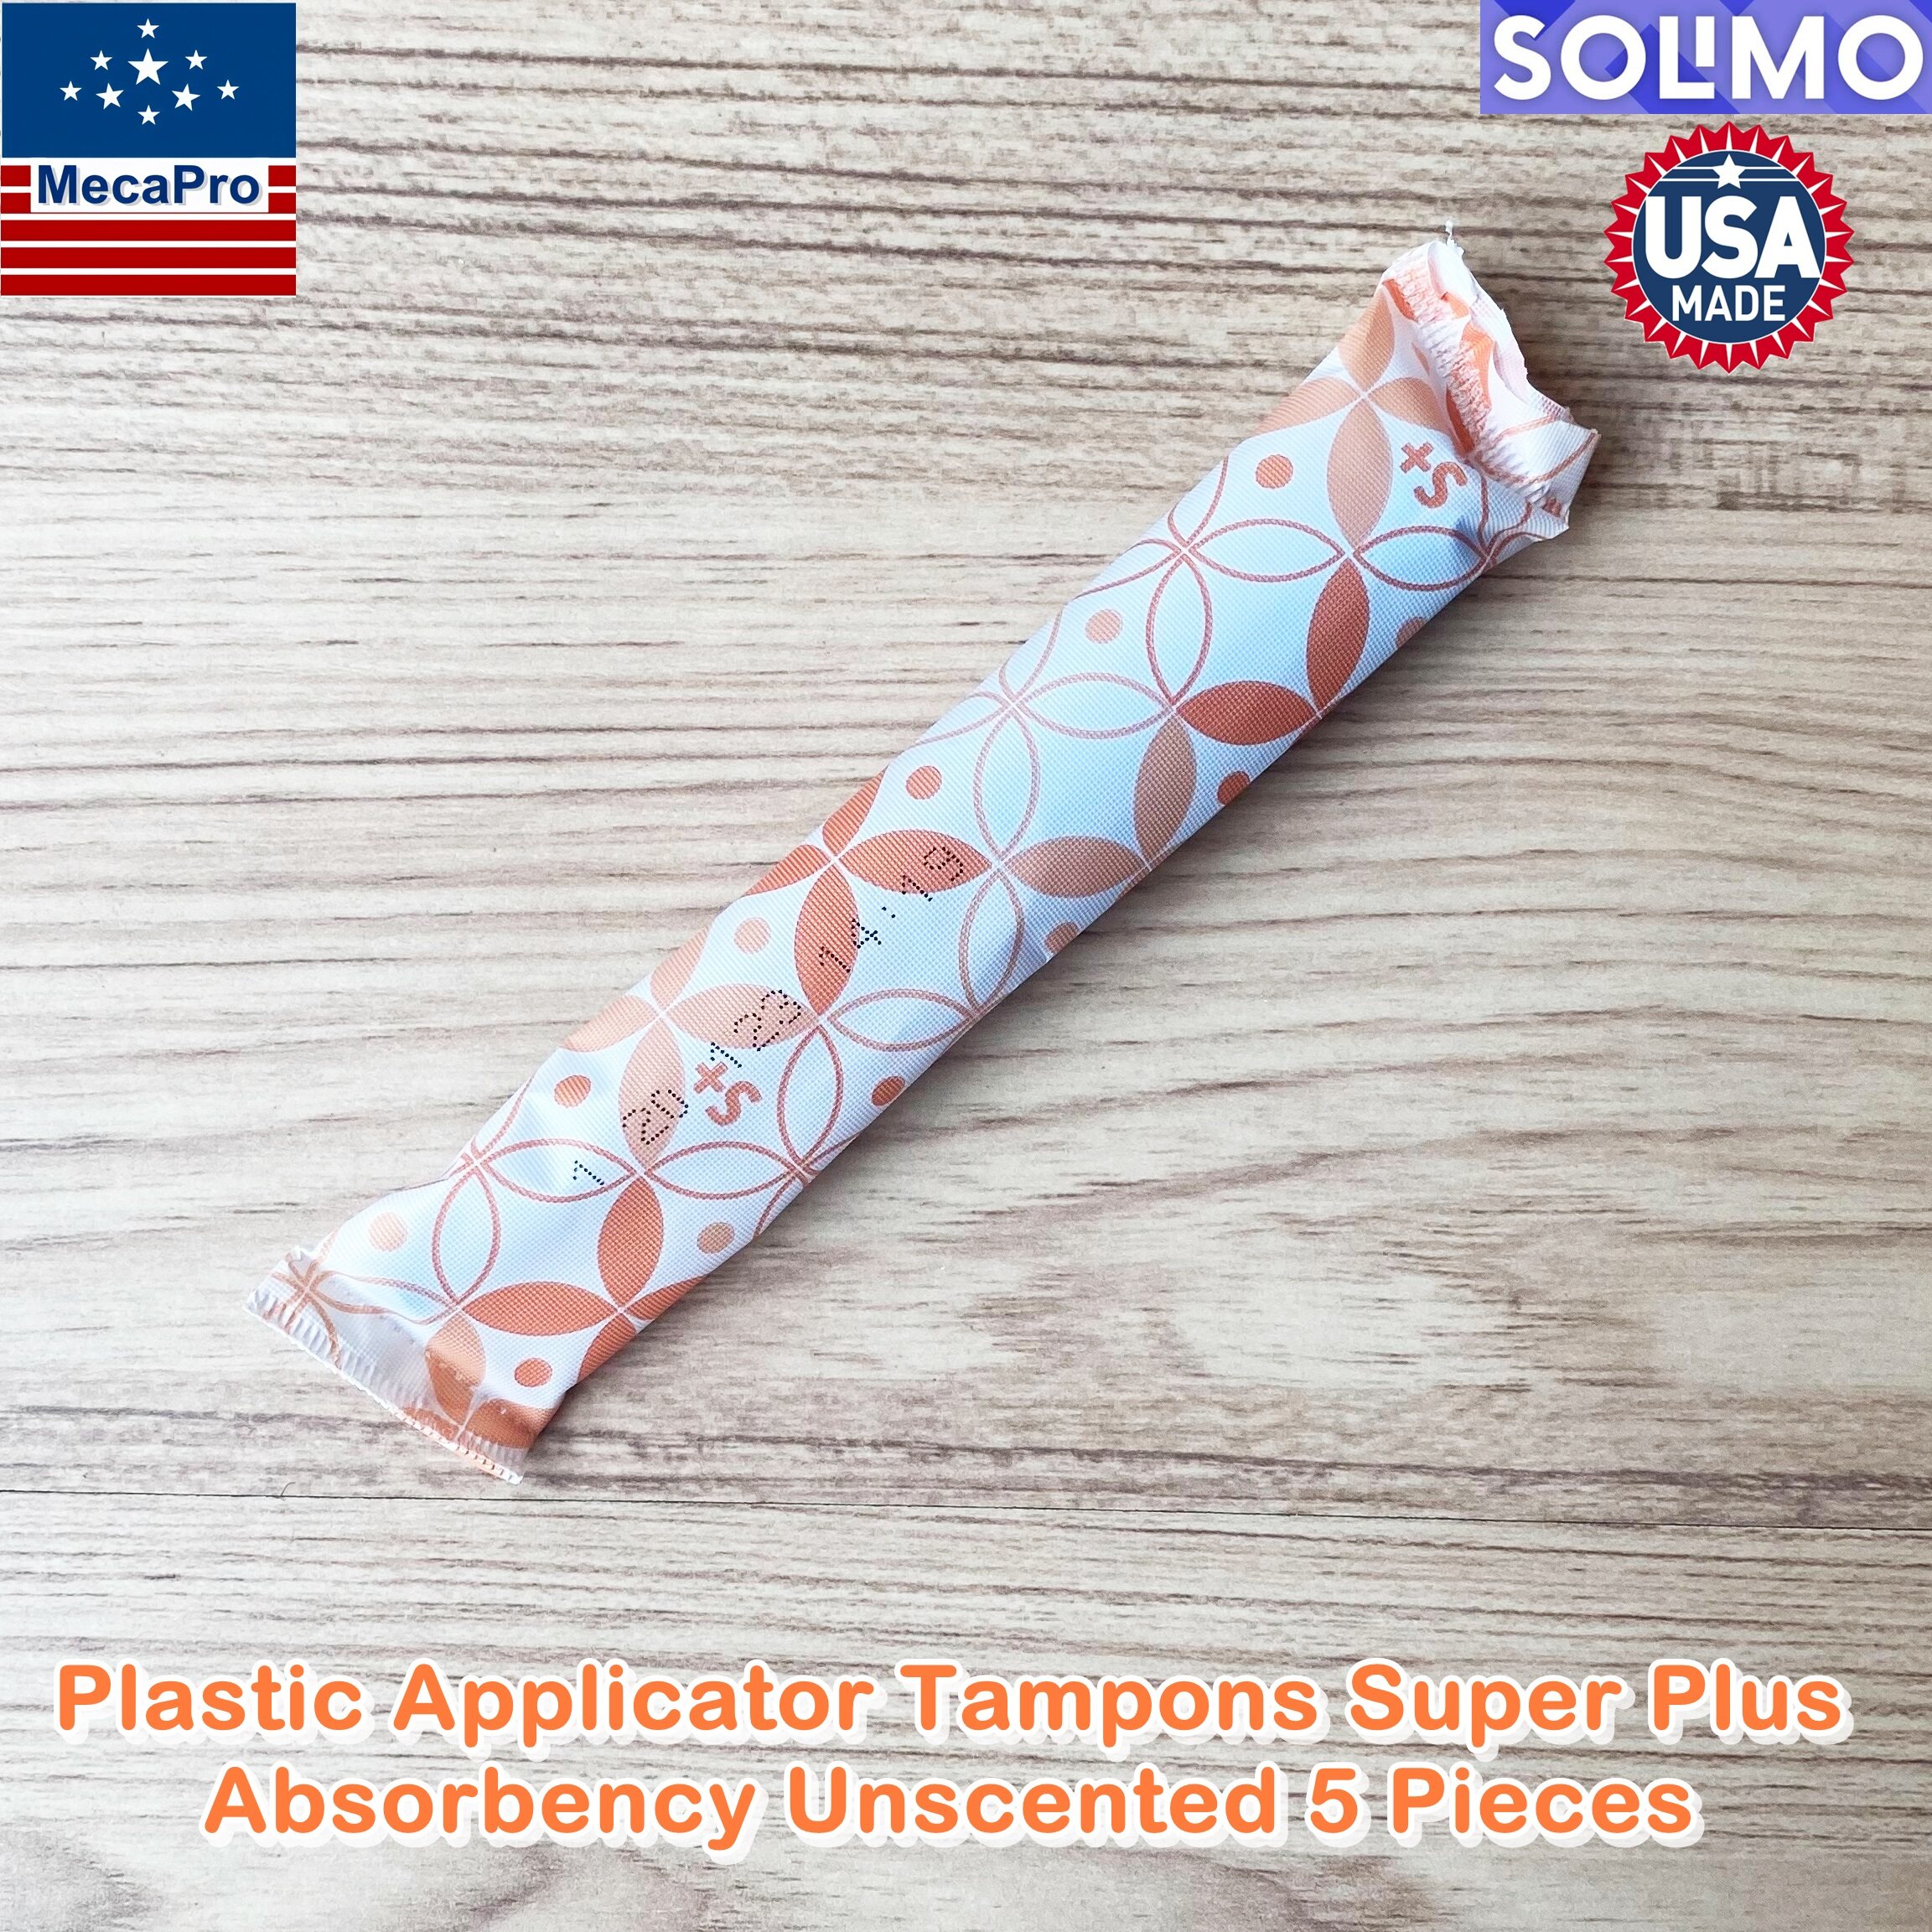 Solimo Plastic Applicator Tampons Super Plus Absorbency Unscented 5 Pieces ผ้าอนามัยแบบสอด โซลิโม 5 ชิ้น แบ่งขาย เหมาะกับวันมามากกว่าปกติ